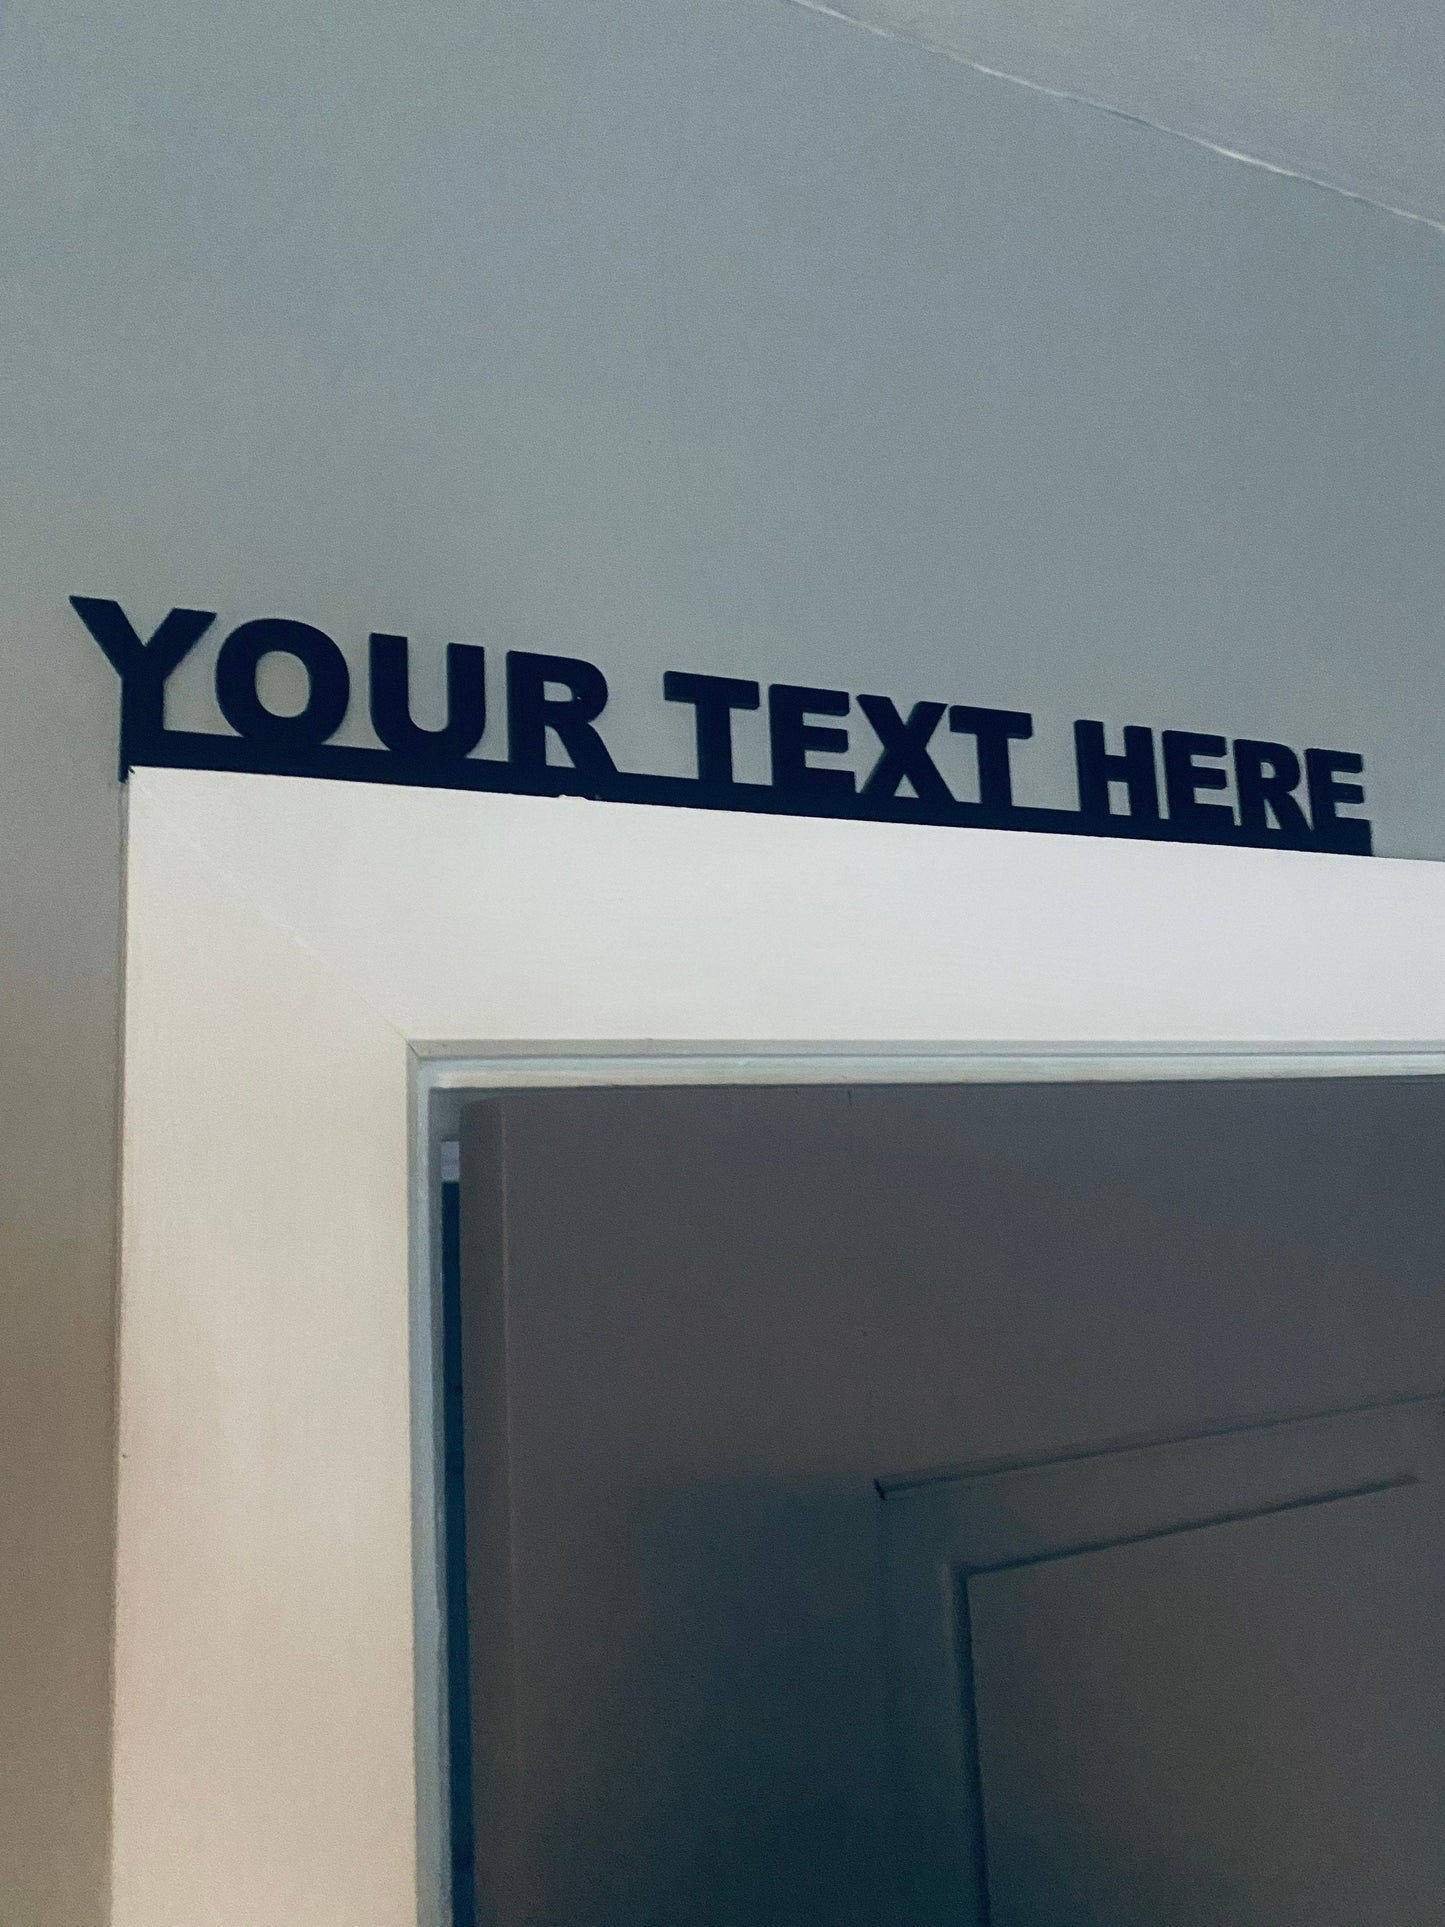 CUSTOM door topper, shelf decor, wall decor - add your own text.